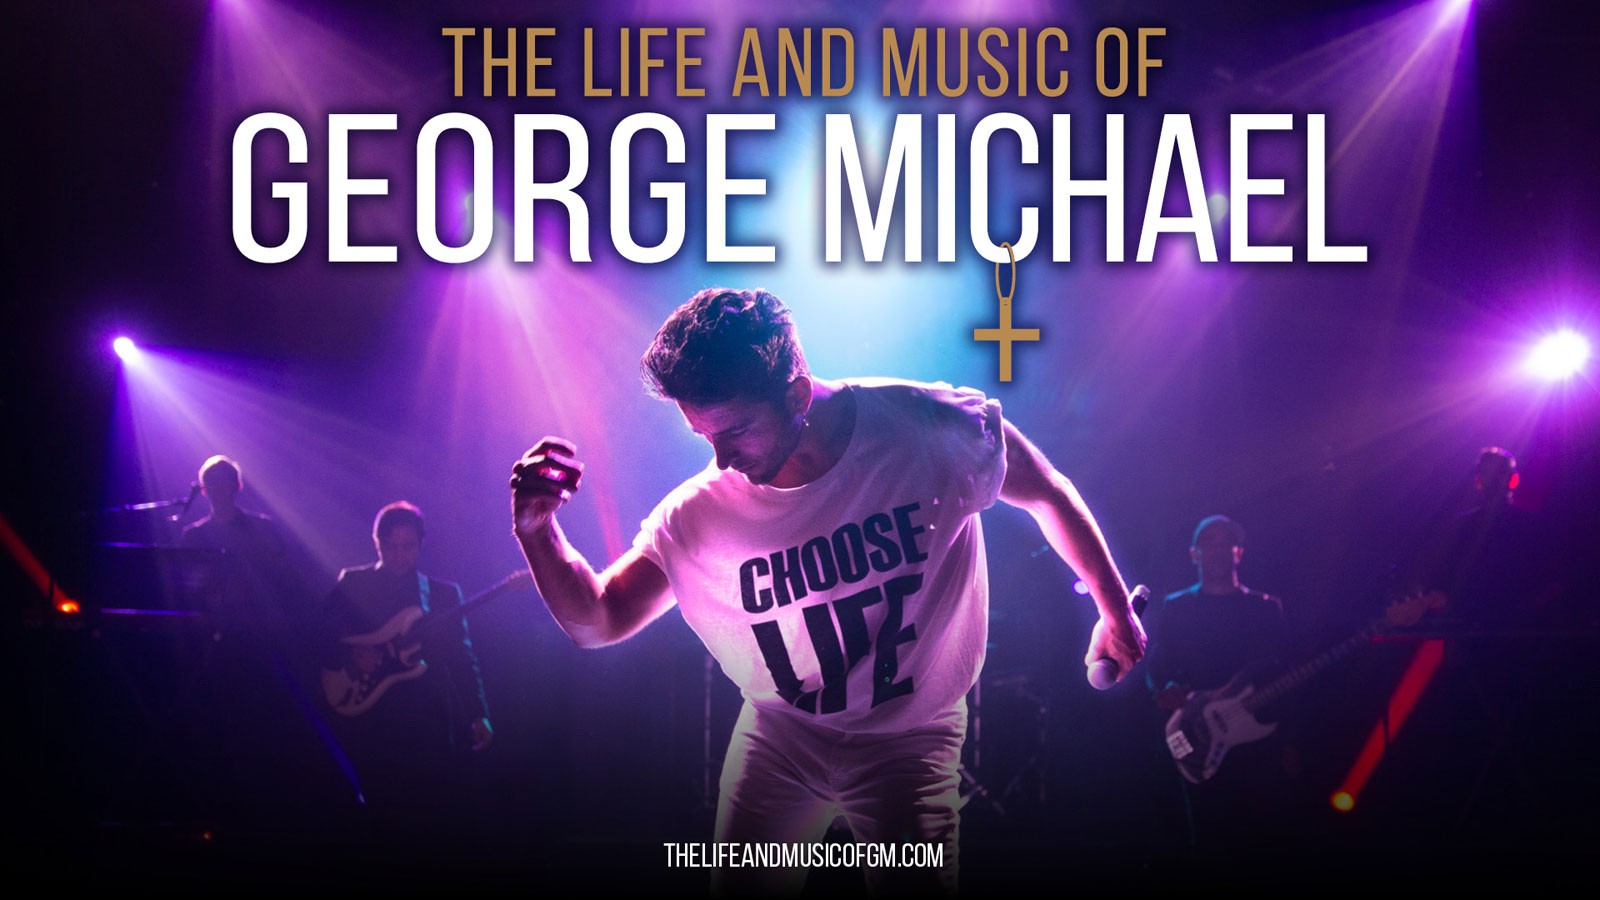 George Michael wearing Choose Life shirt strikes a pose